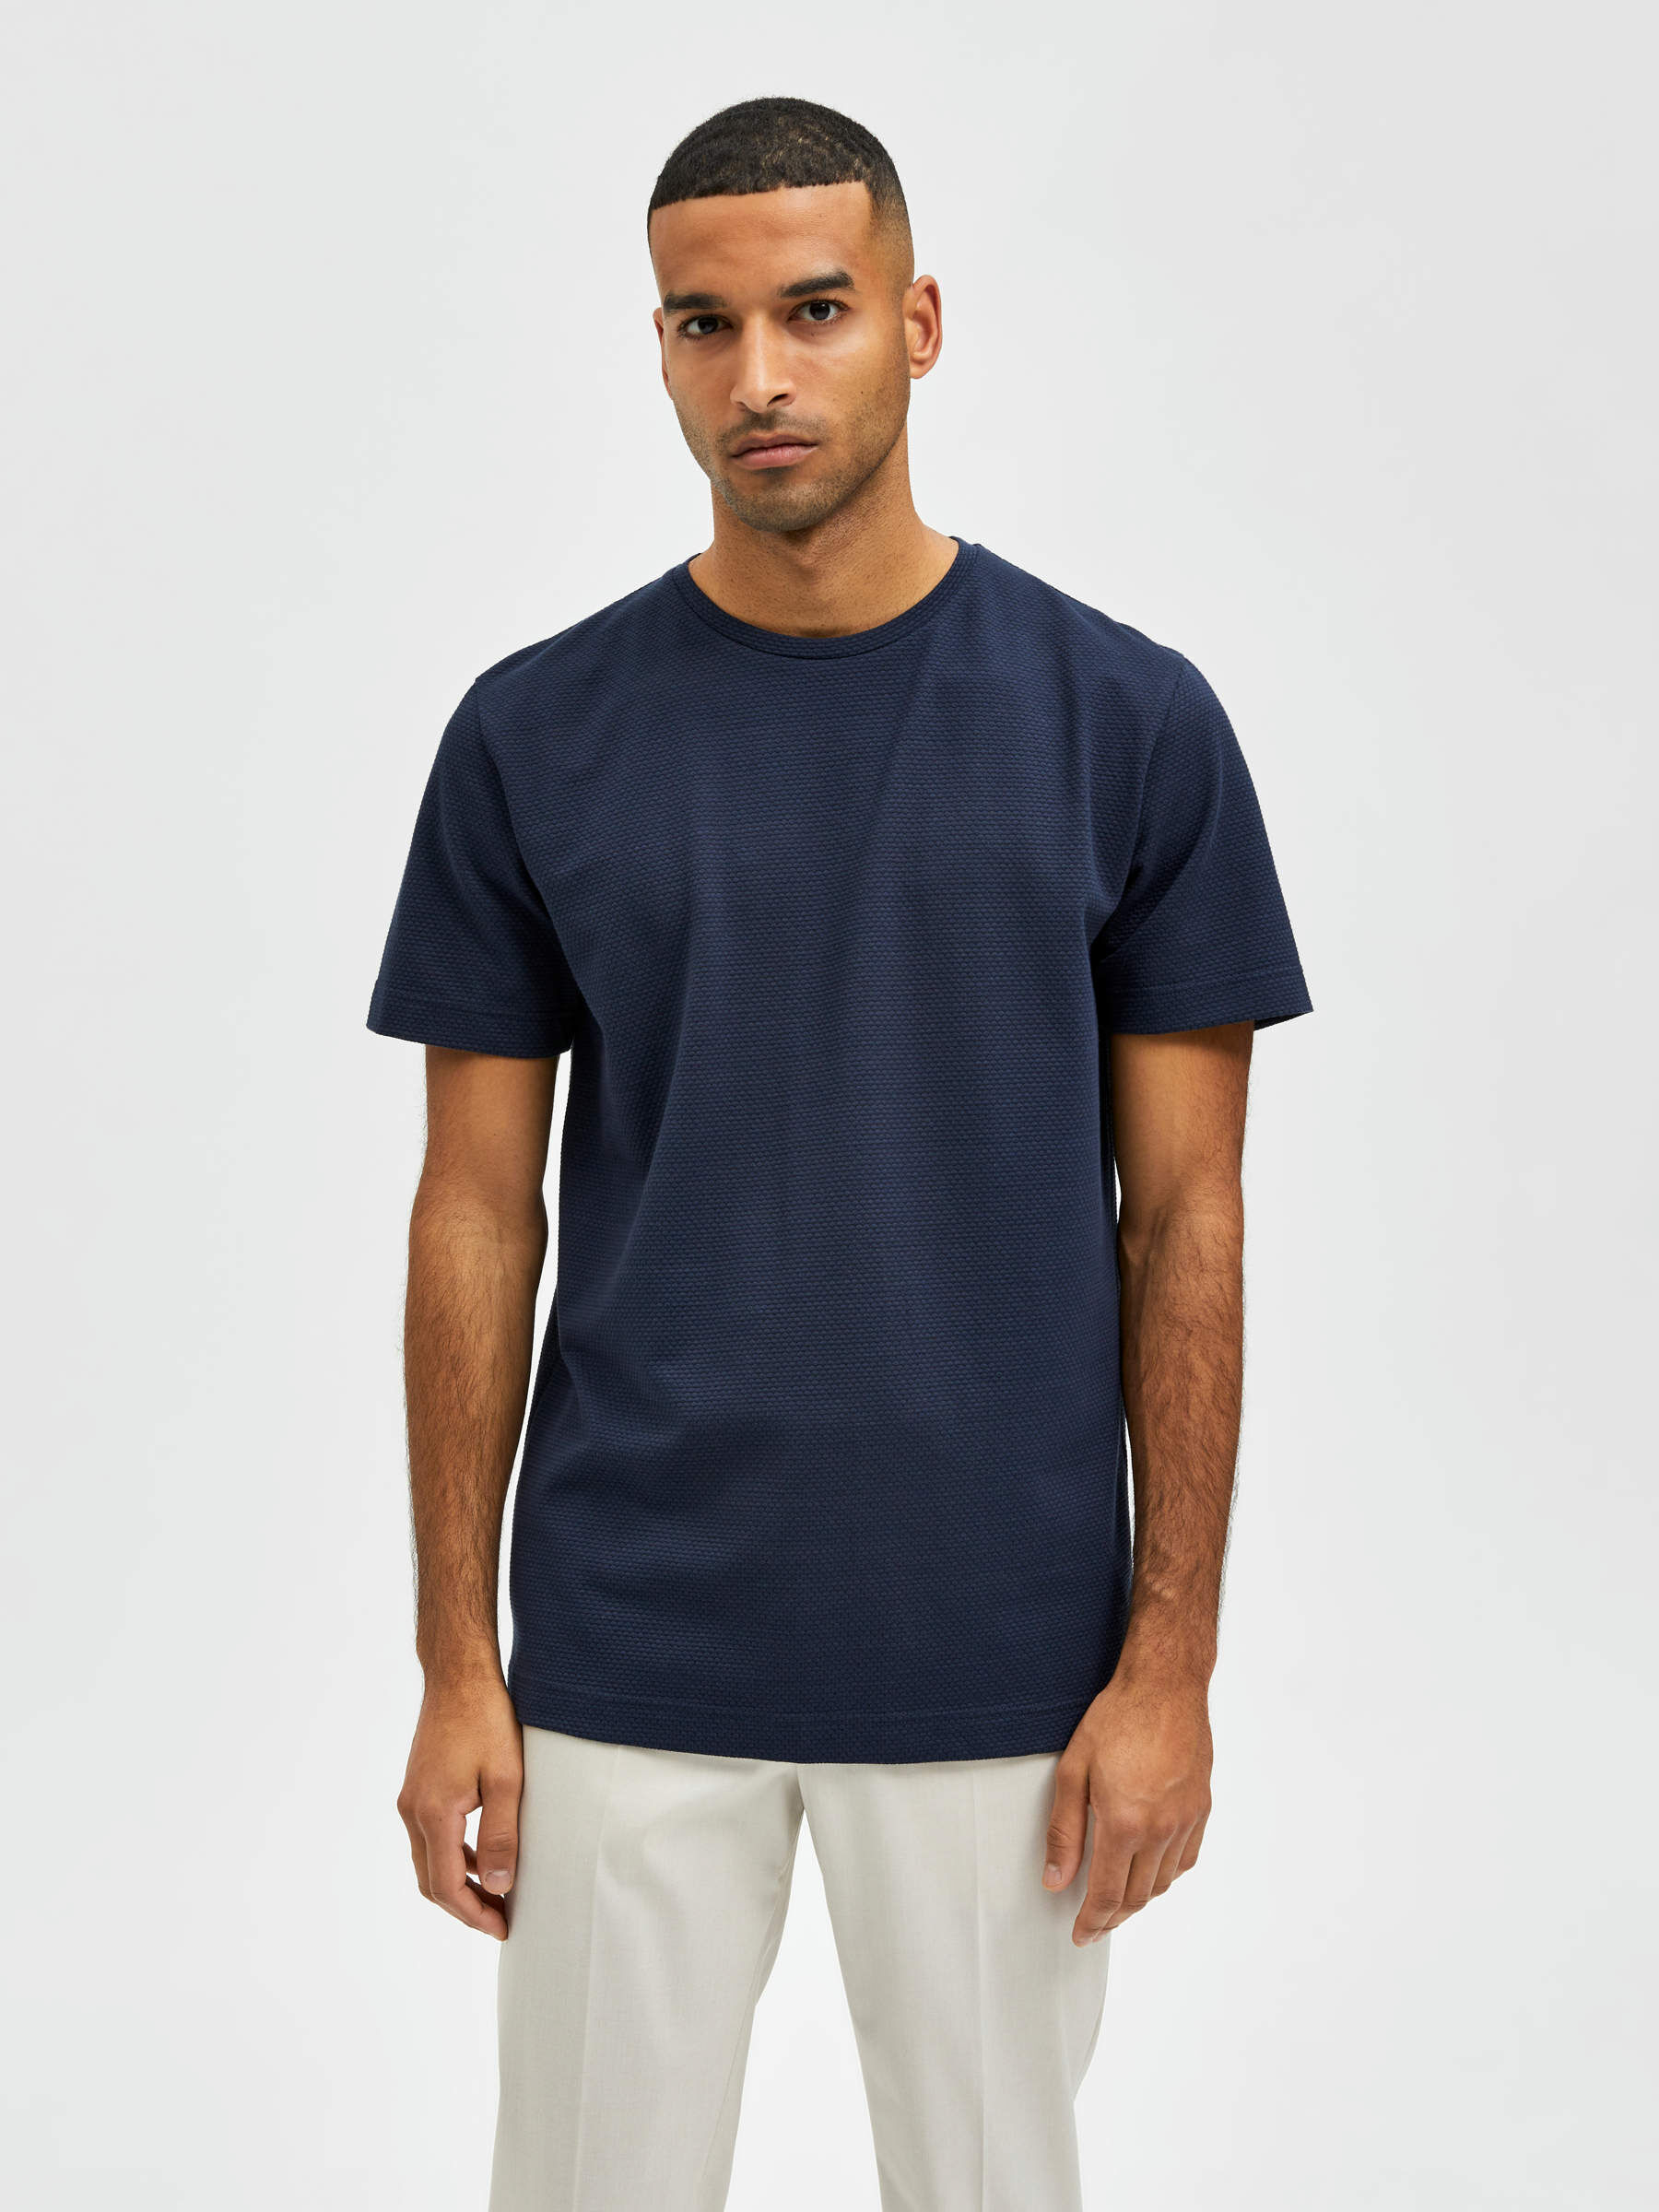 Men's T-shirts | Plain, Casual, Striped 